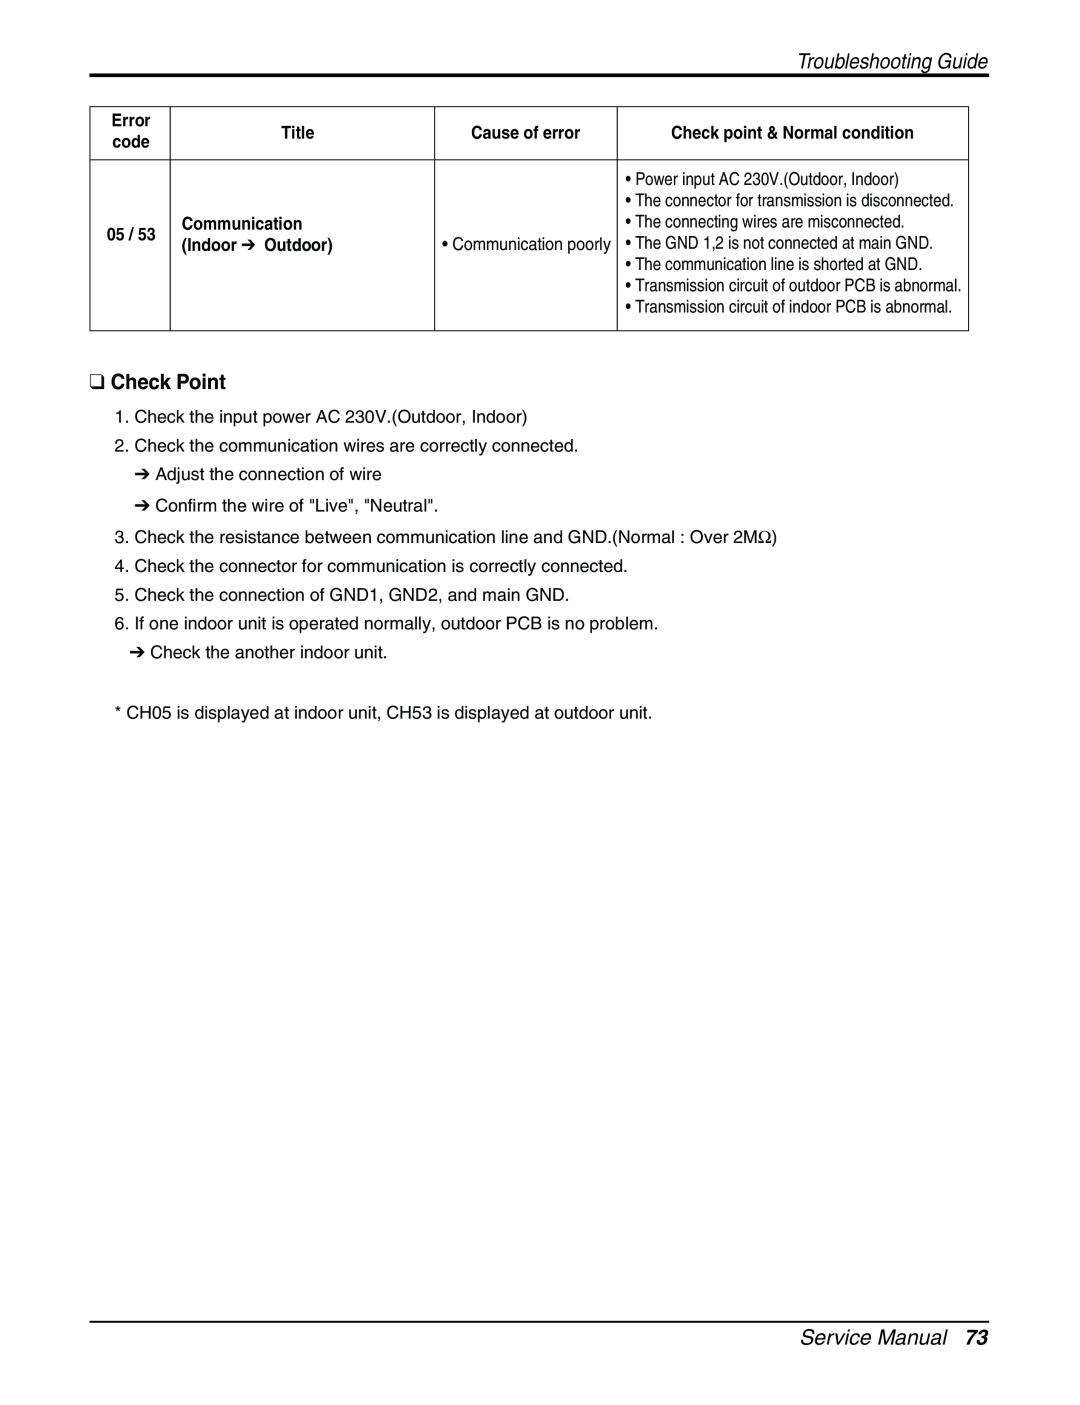 LG Electronics AMNC093APM0(LMAN090CNS) Check Point, Service Manual, Troubleshooting Guide, Title, Communication 